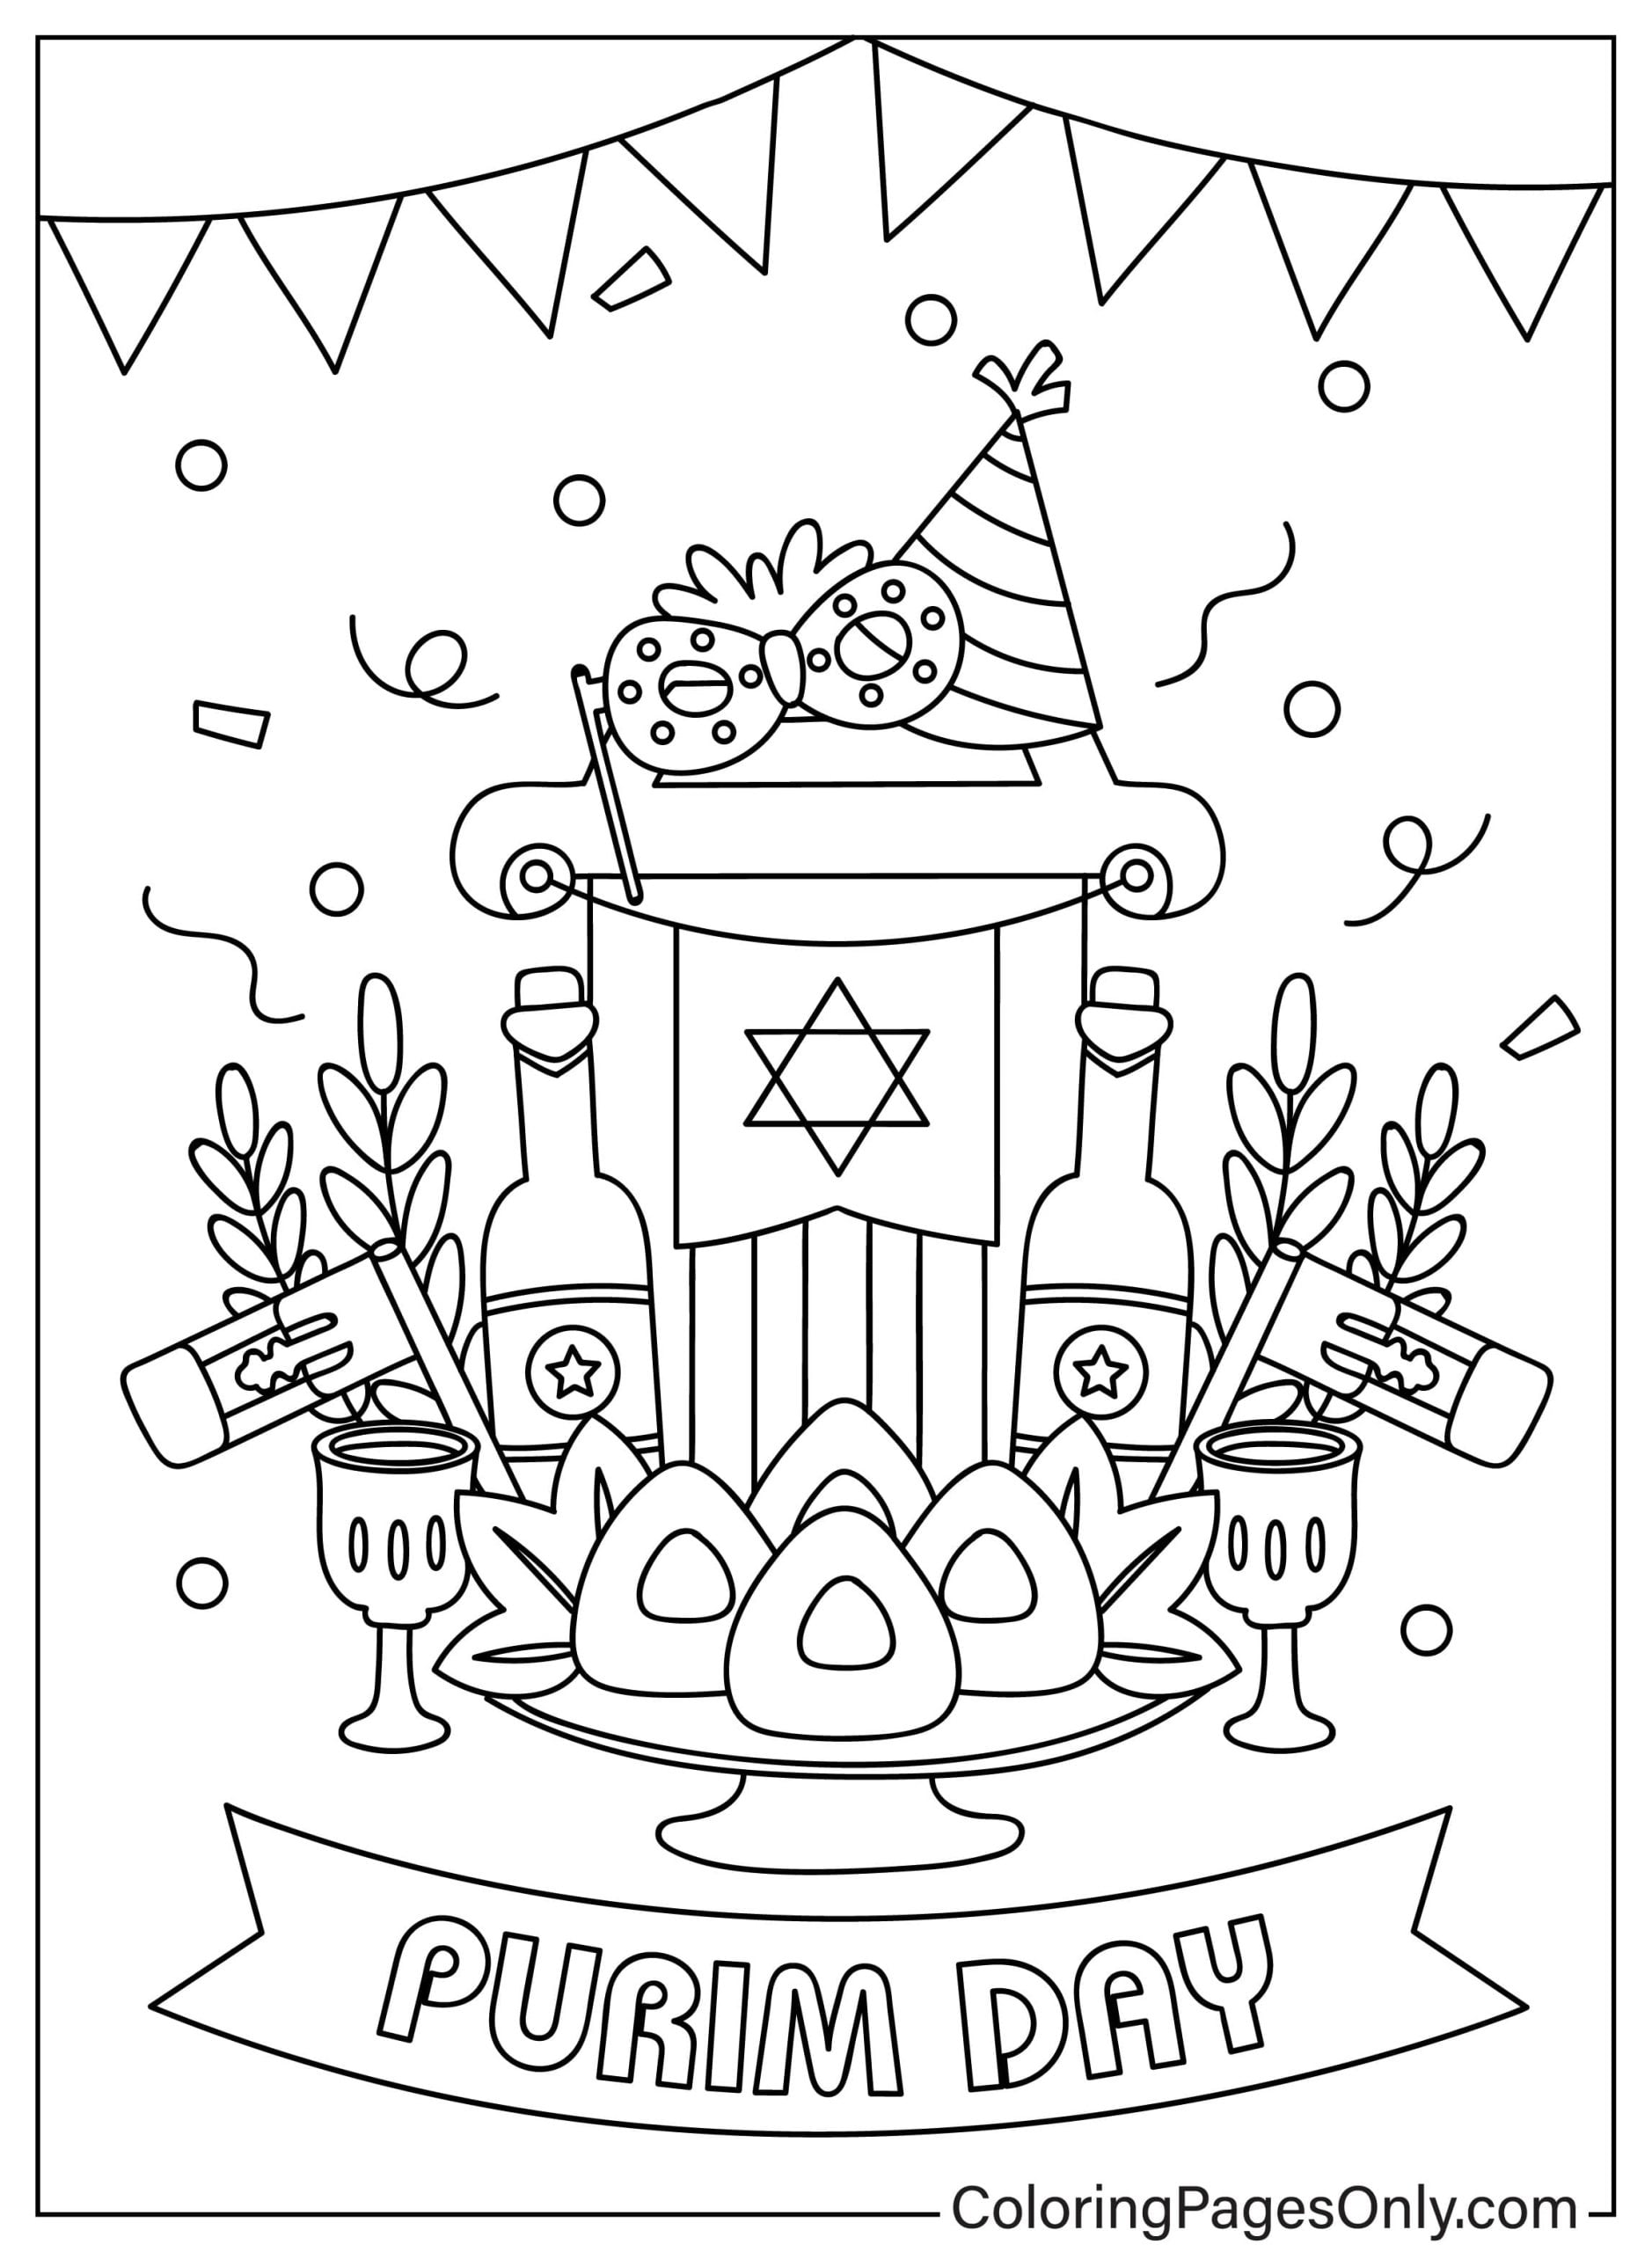 Página para colorear de Purim gratis de Purim